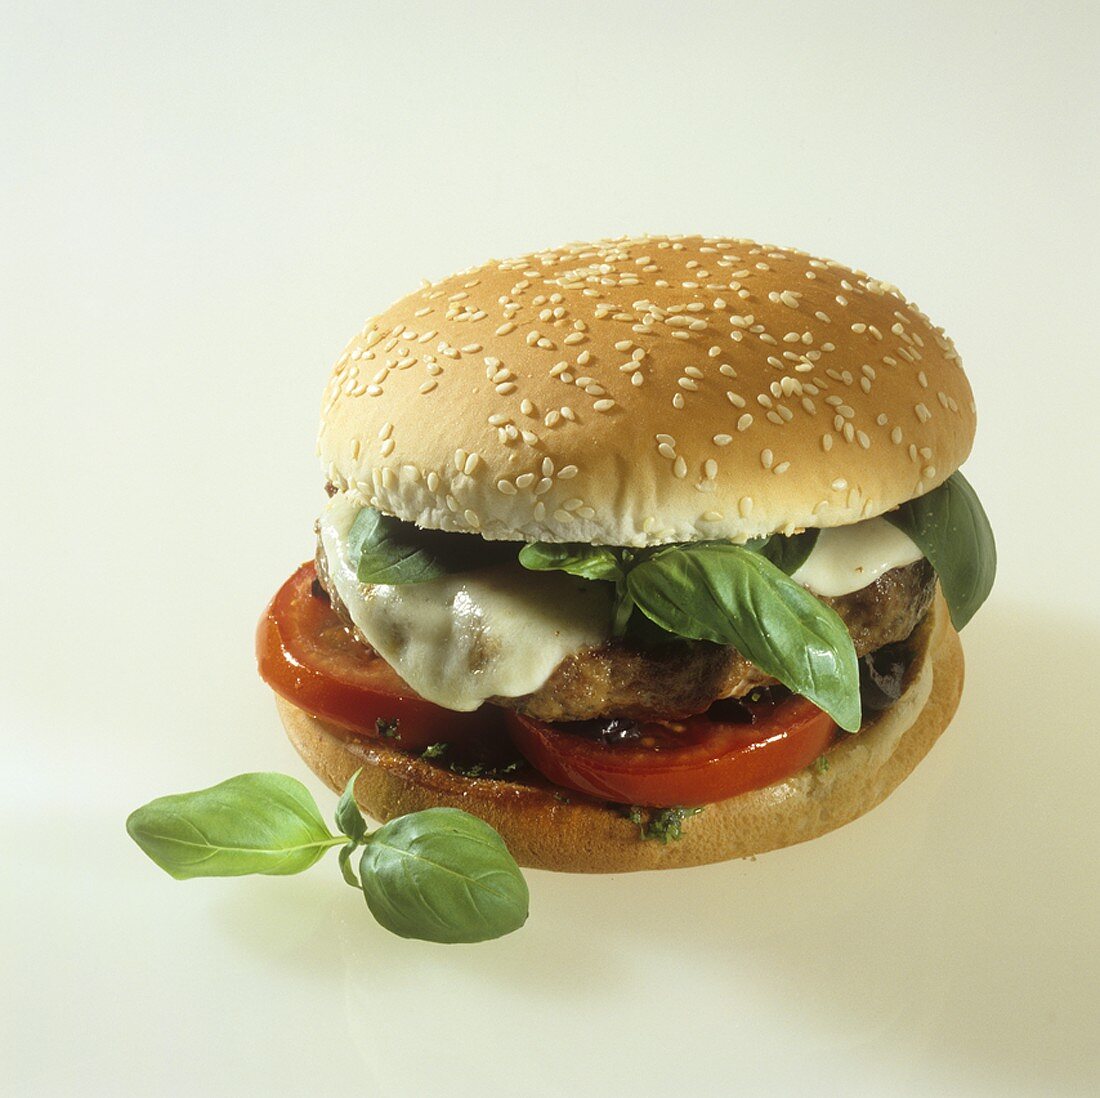 A hamburger with basil leaves